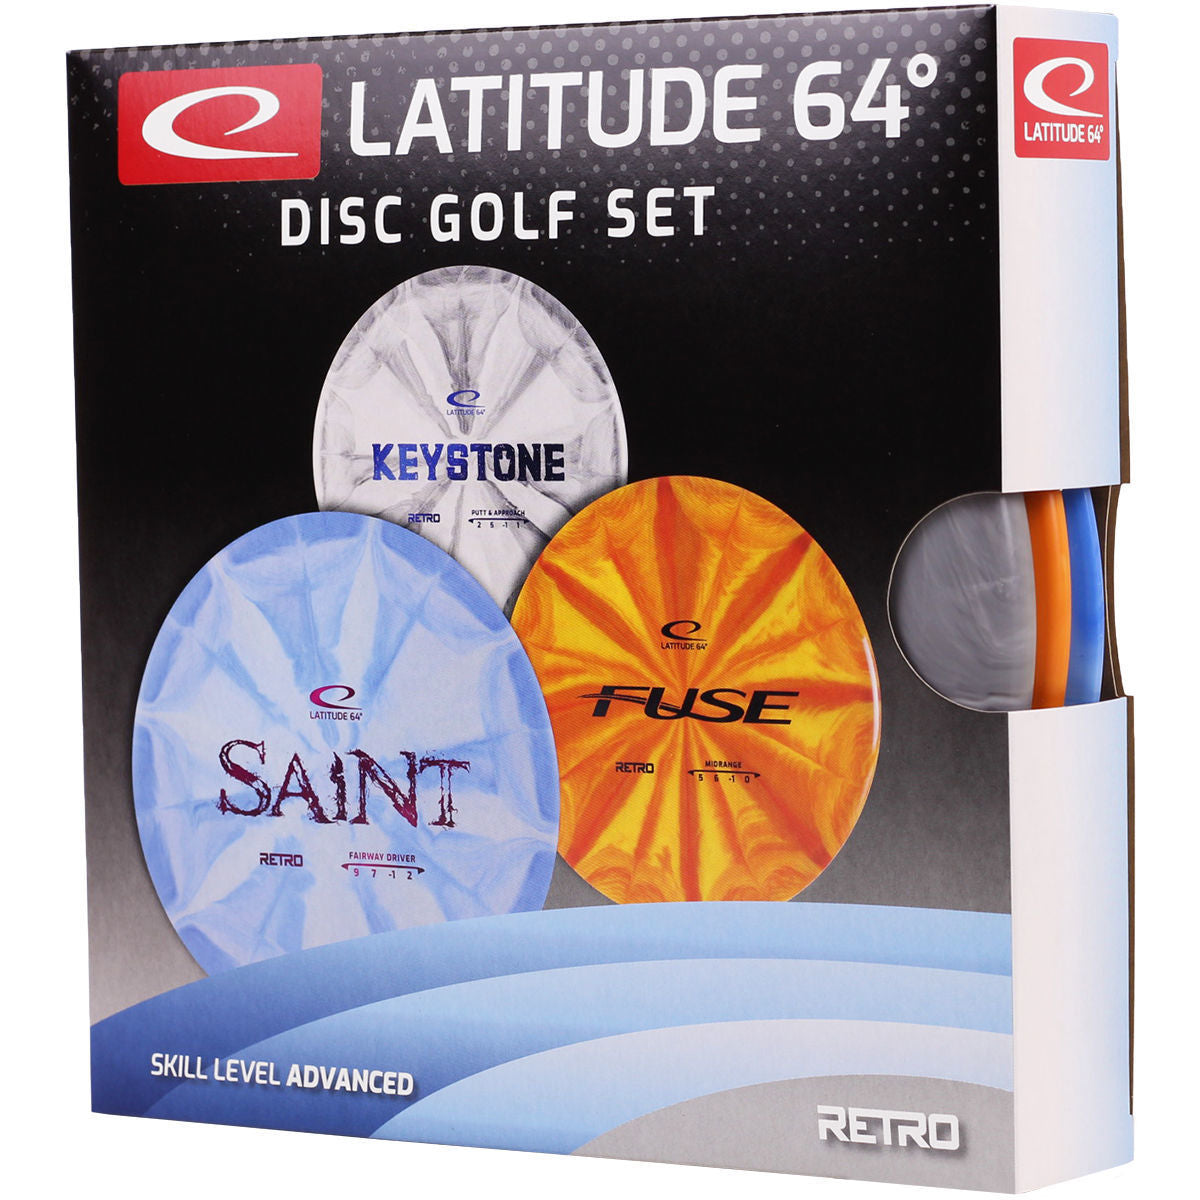 Latitude 64 disc golf set